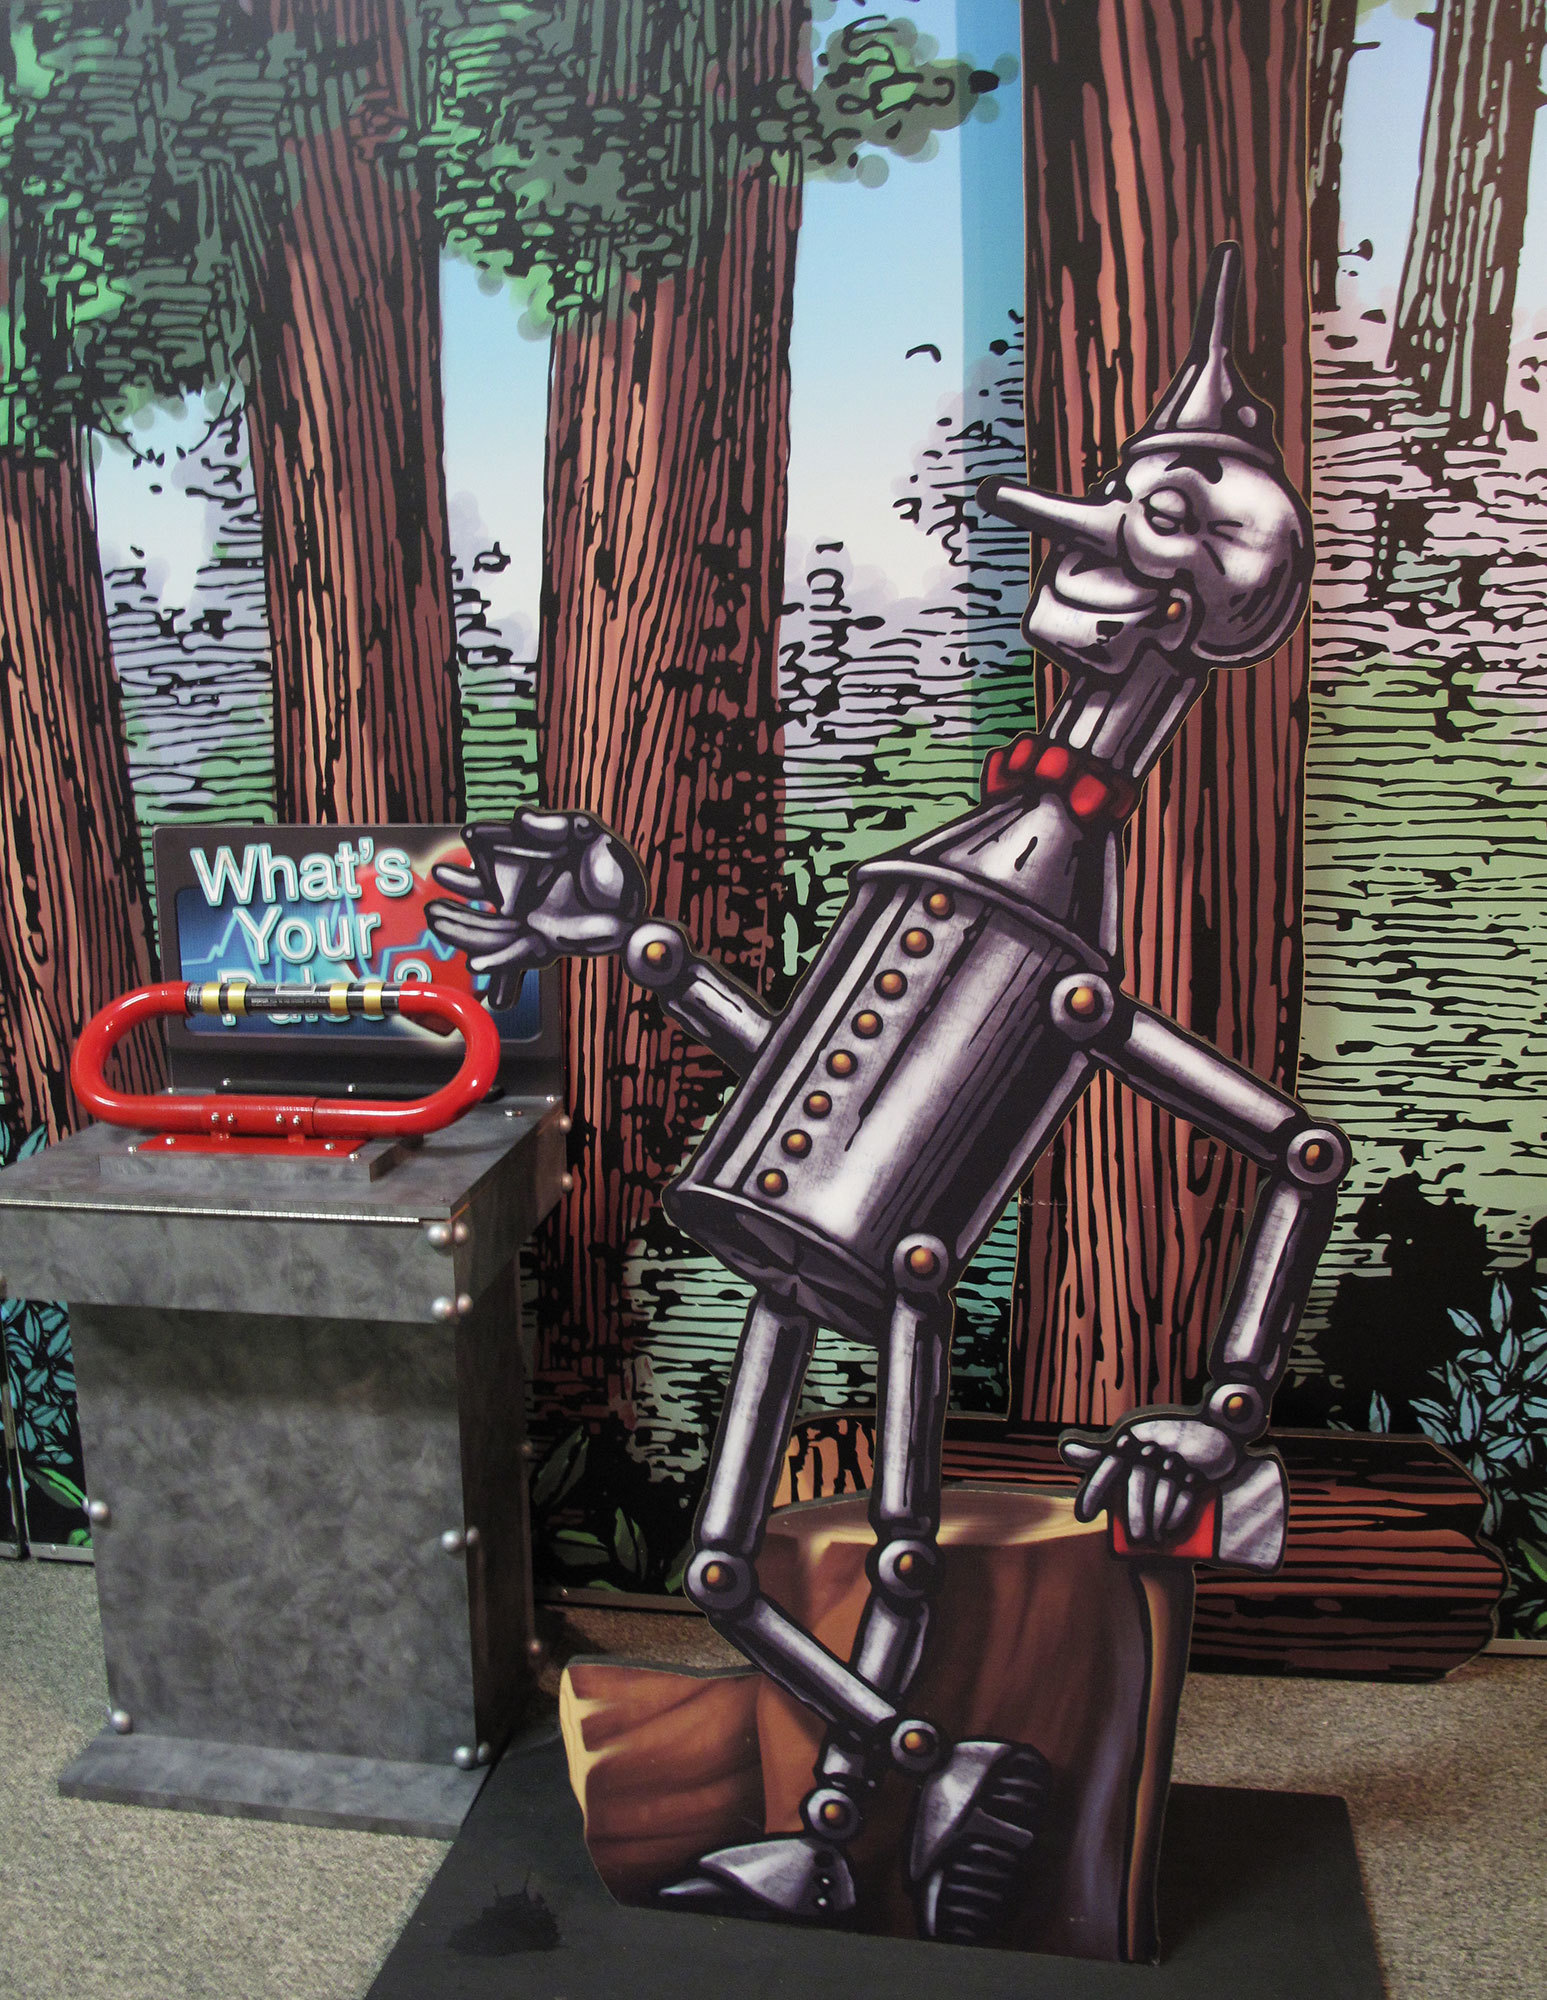 2D Tin Man cutout at Wizard of Oz Interactive Display at Great Explorations Museum